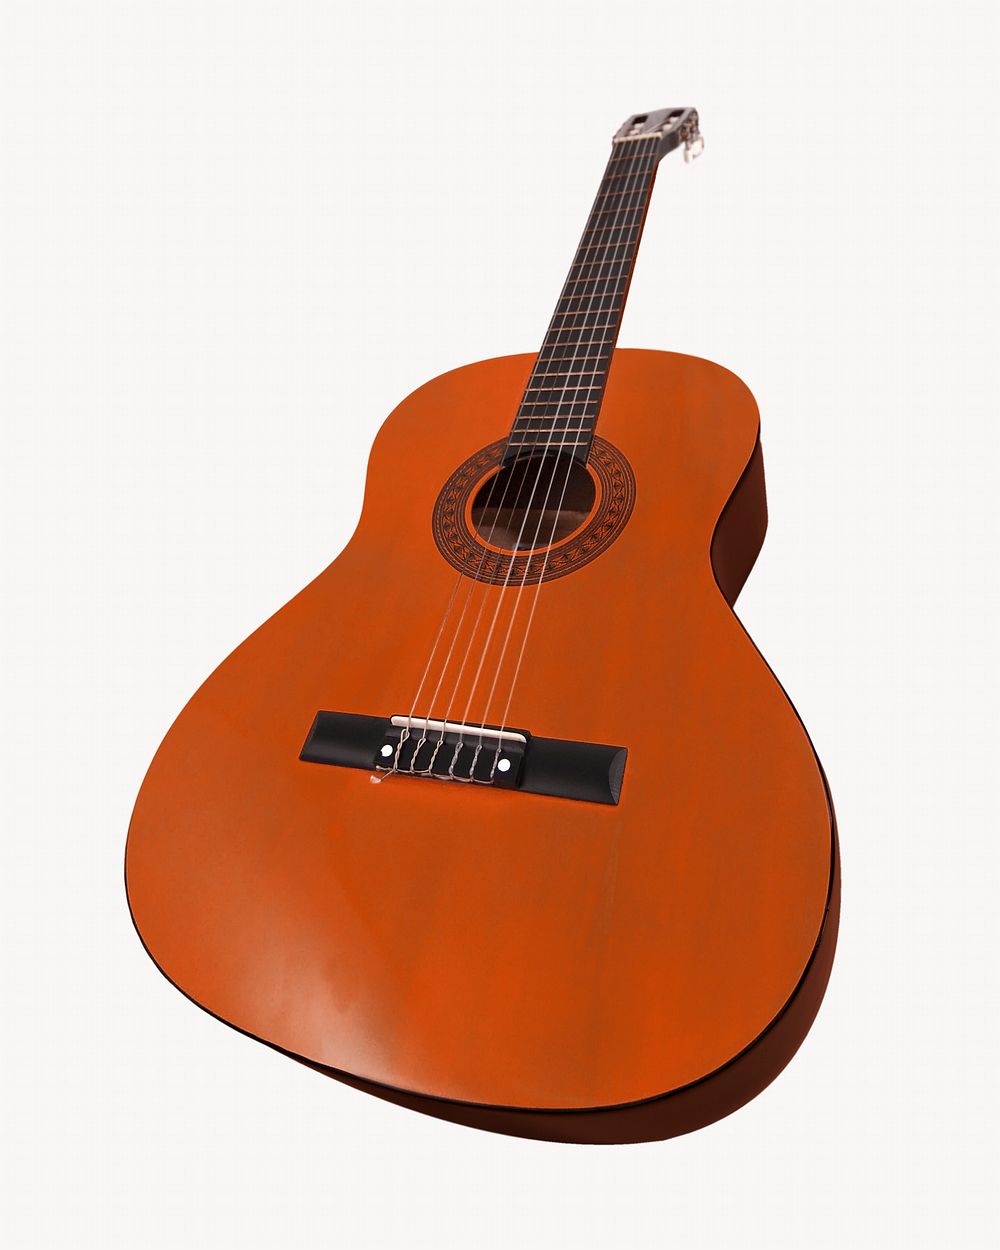 Acoustic guitar instrument, music design